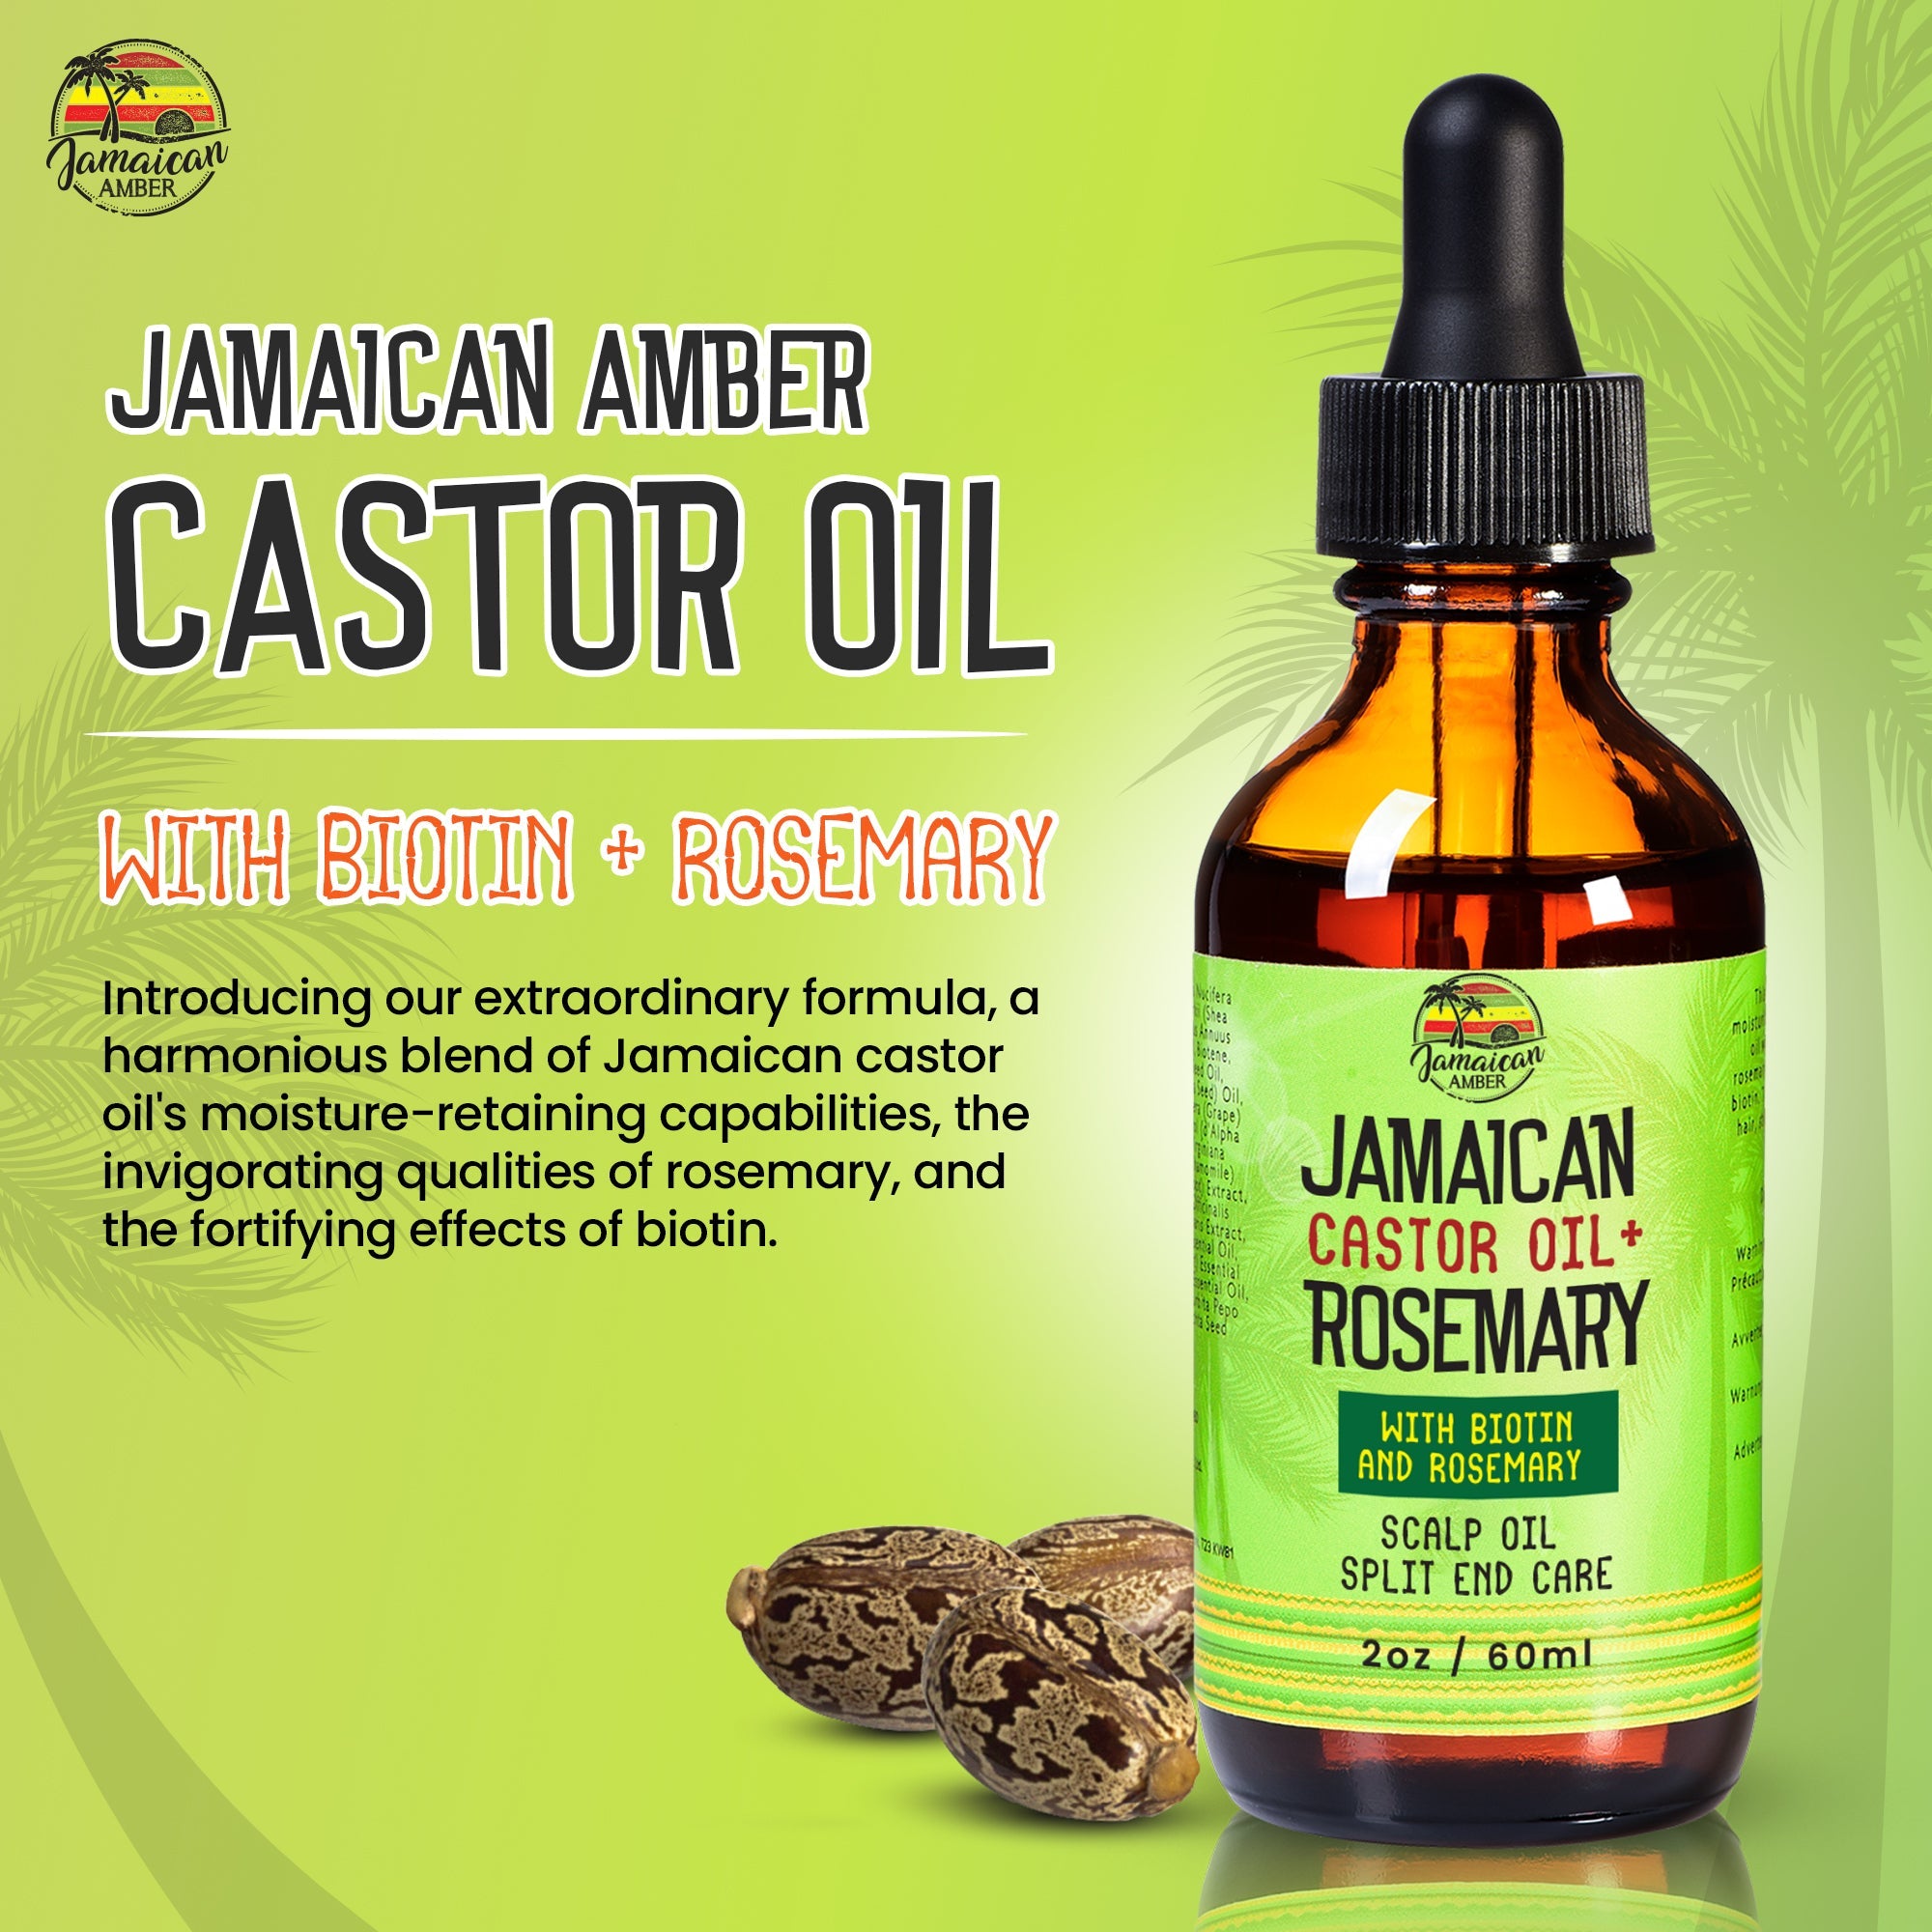 Jamaican Amber Jamaican Castor Oil & Rosemary Hair Oil  2 oz/60 ml Mitchell Brands - Mitchell Brands - Skin Lightening, Skin Brightening, Fade Dark Spots, Shea Butter, Hair Growth Products